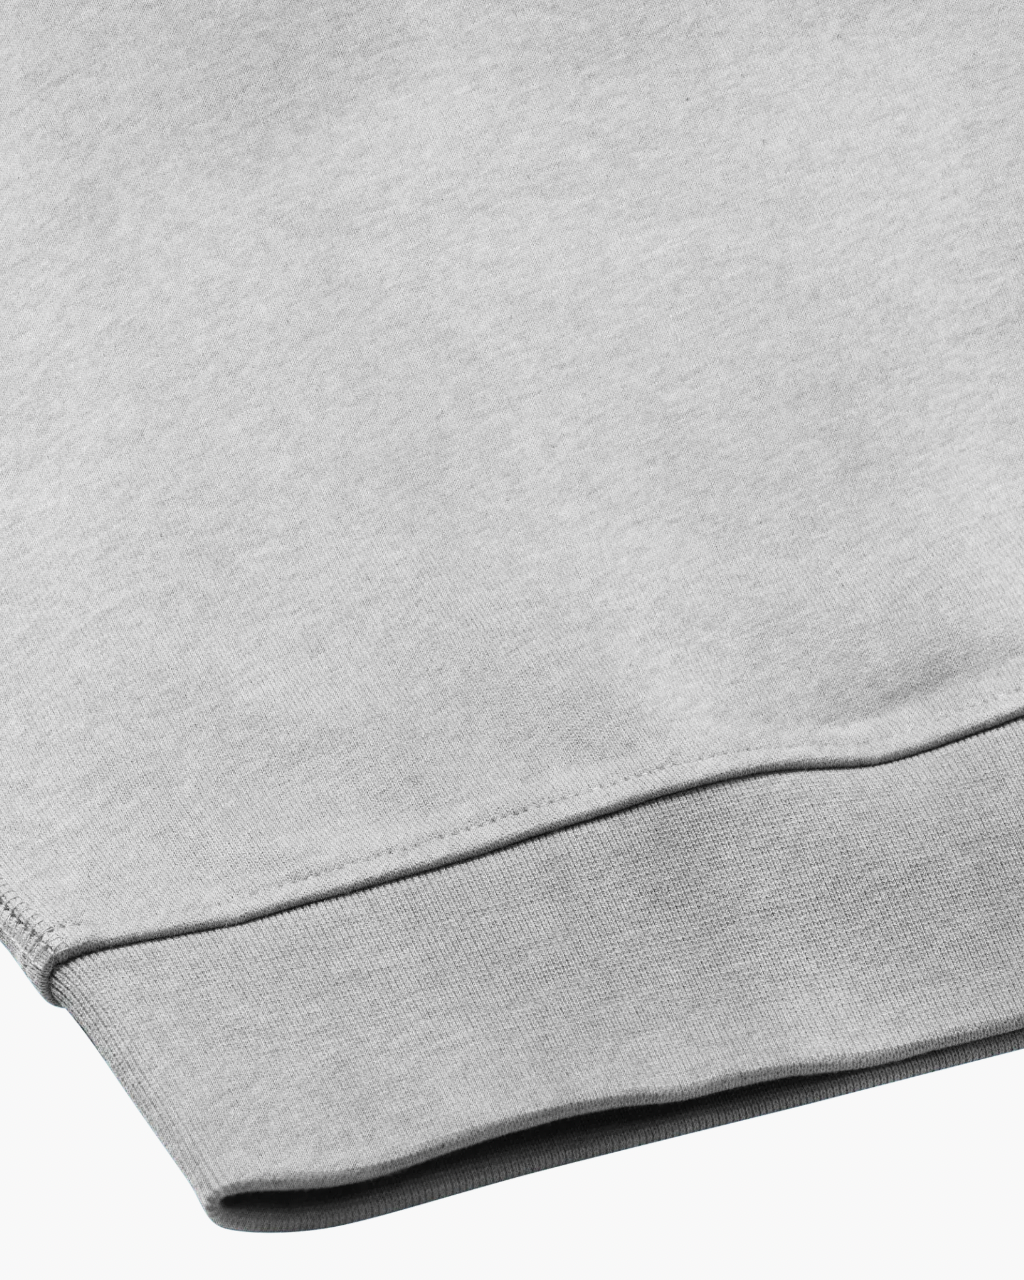 M´s Boxy Surfshop Sweatshirt - Grey Melange - XL